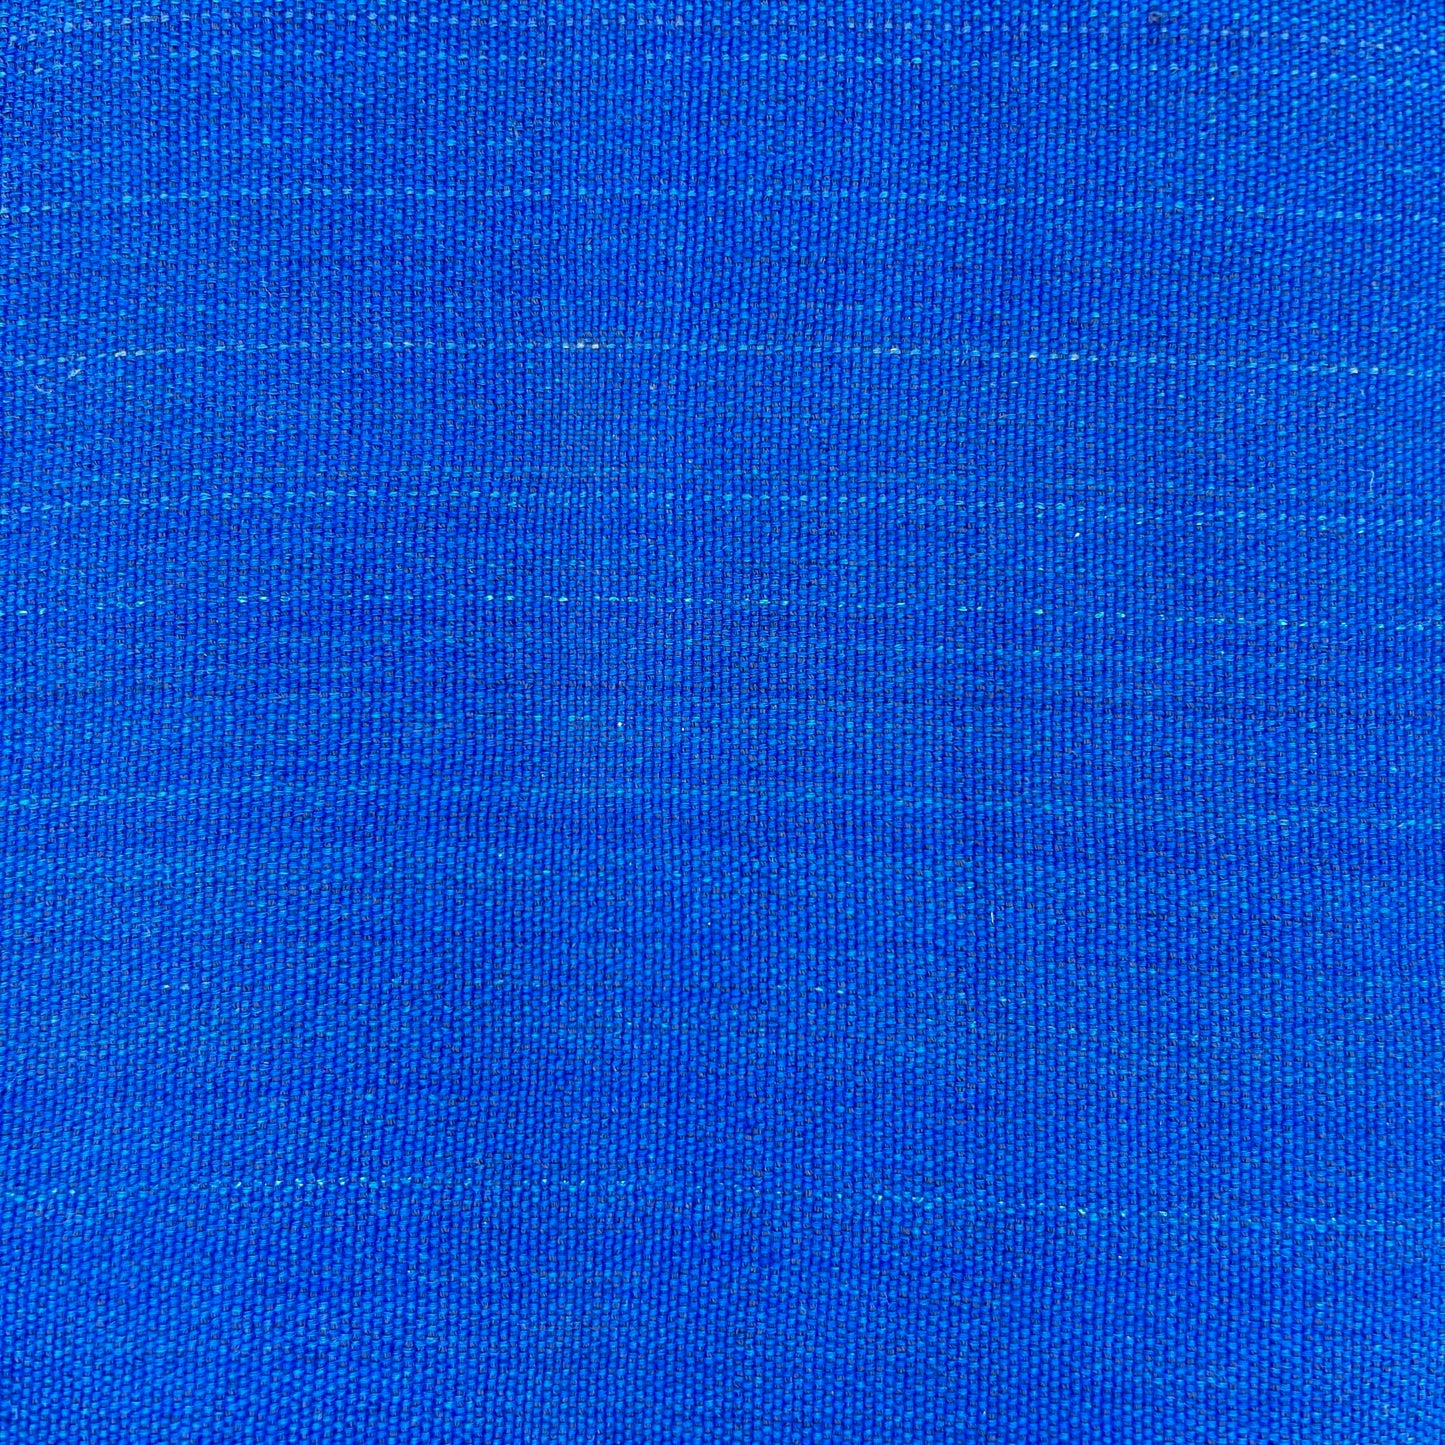 Deep Blue Filipino Handwoven Blanket